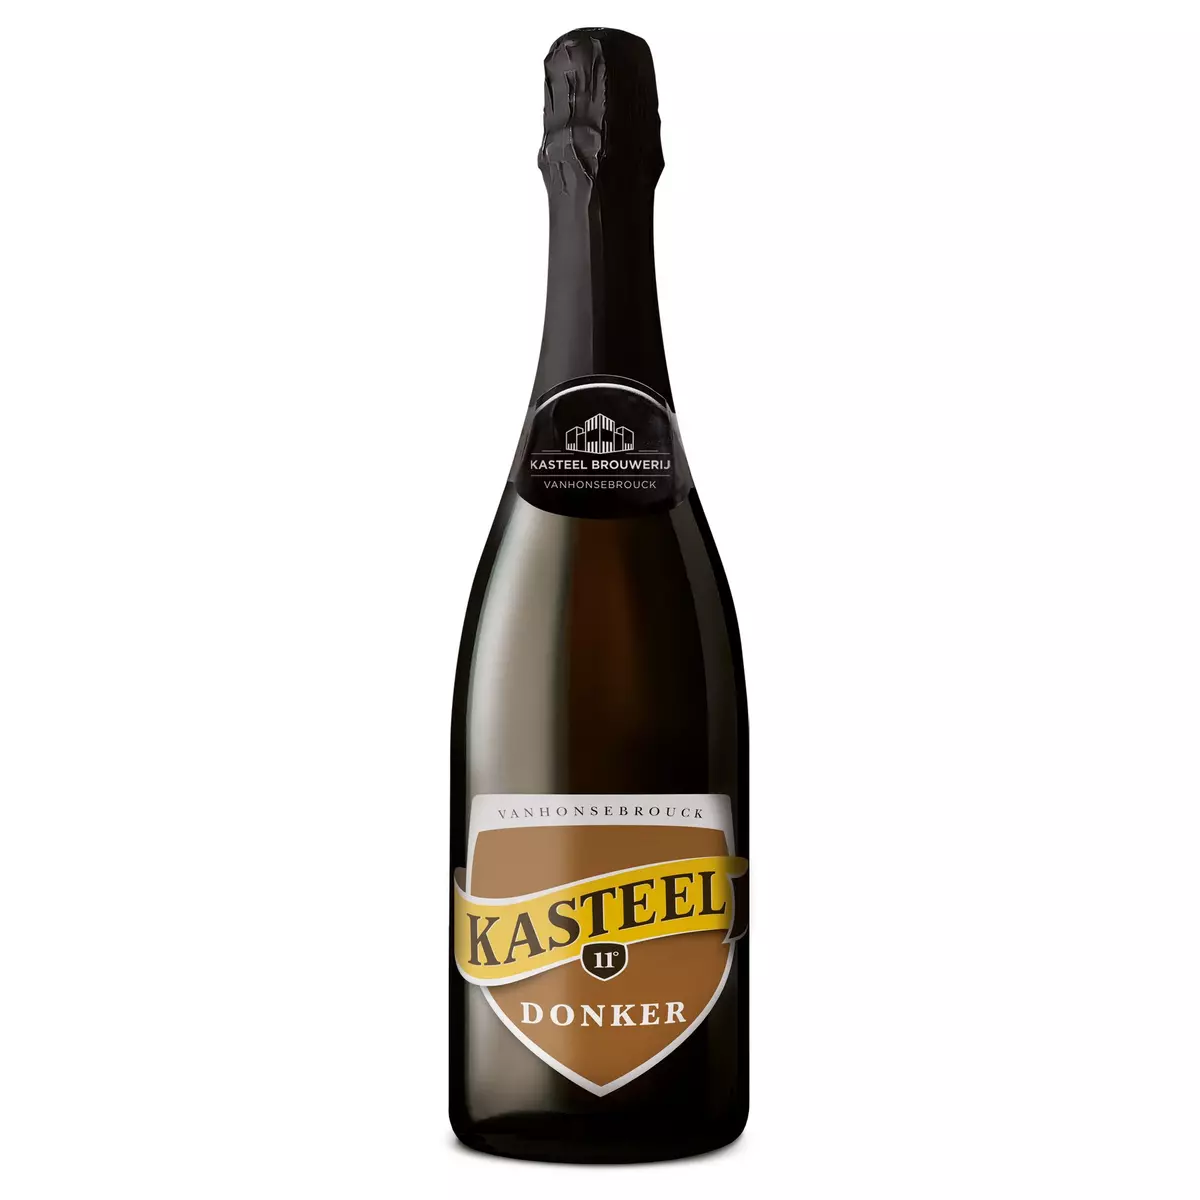 KASTEEL Bière brune belge 11% 75cl